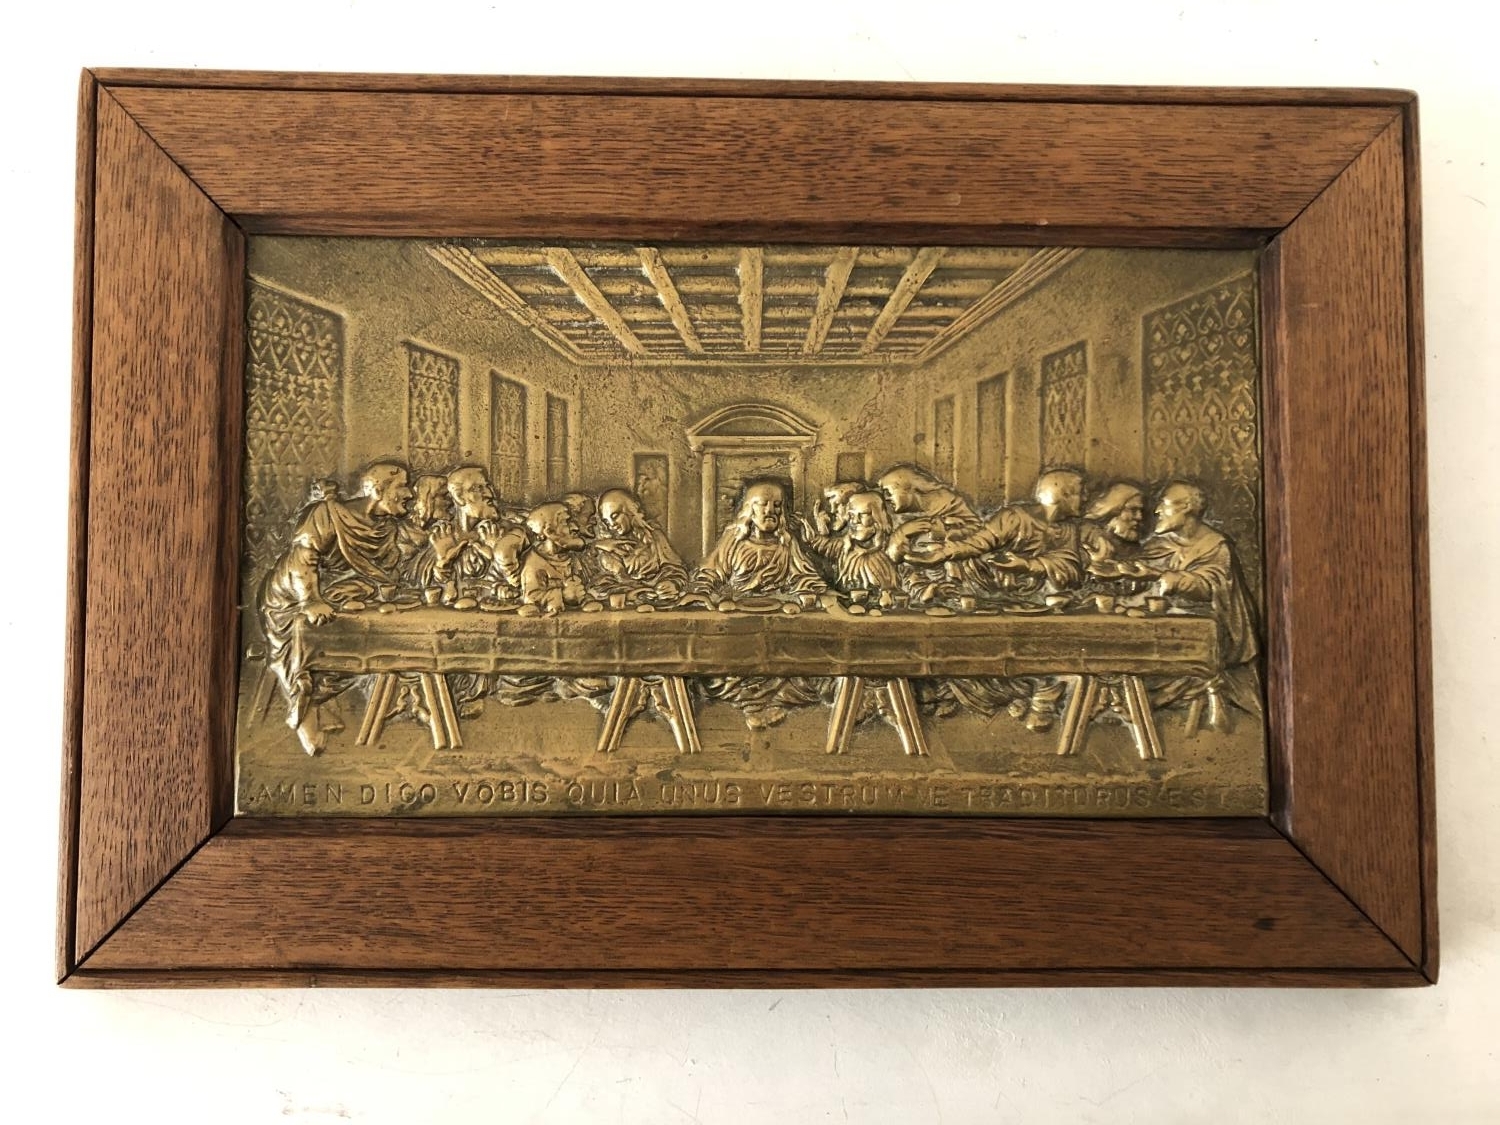 Cast brass metal relief plaque depicting The Last Supper, 27 x 41 cm including oak frame